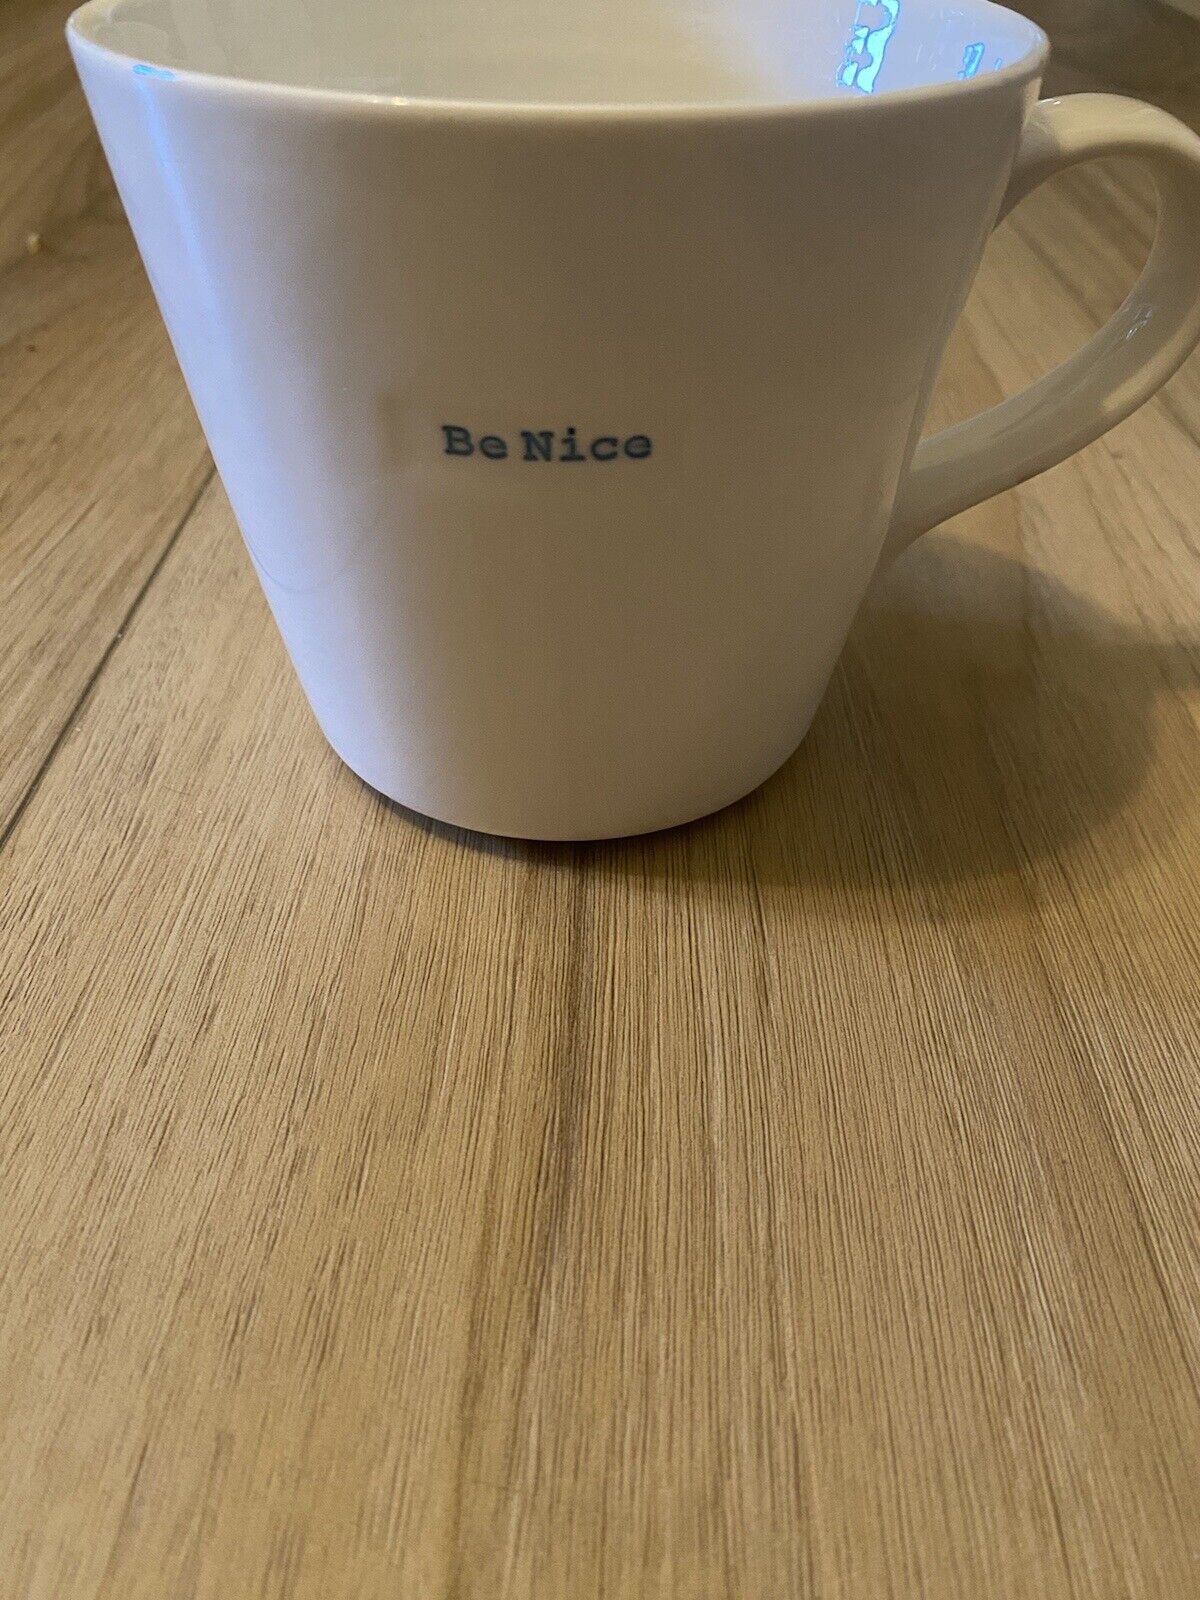 Be Nice Keith Brymer Jones Stamped coffee mug